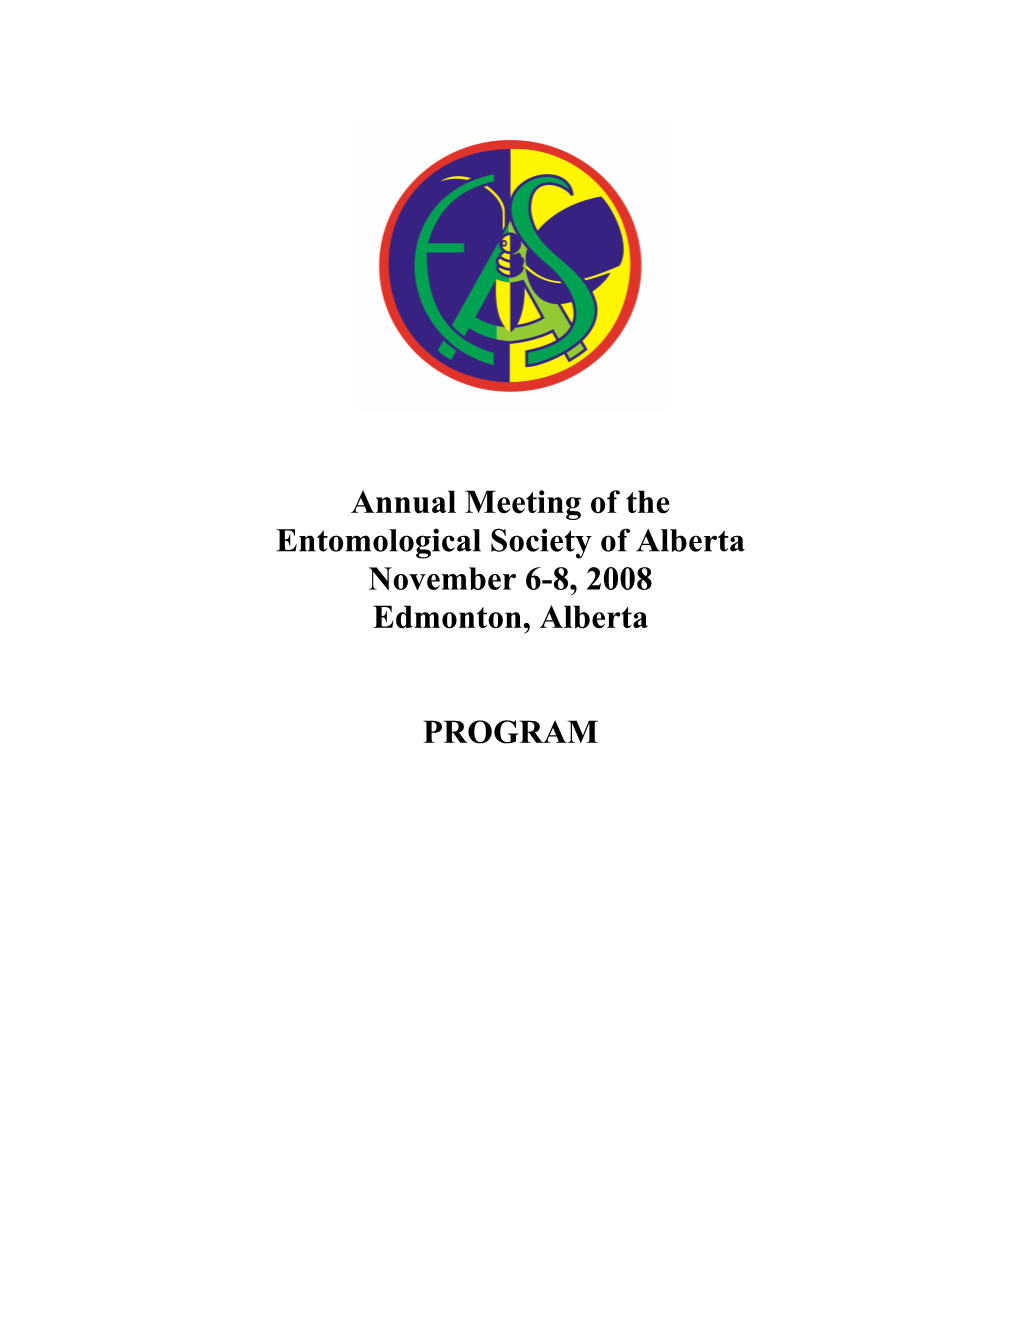 Annual Meeting of the Entomological Society of Alberta November 6-8, 2008 Edmonton, Alberta